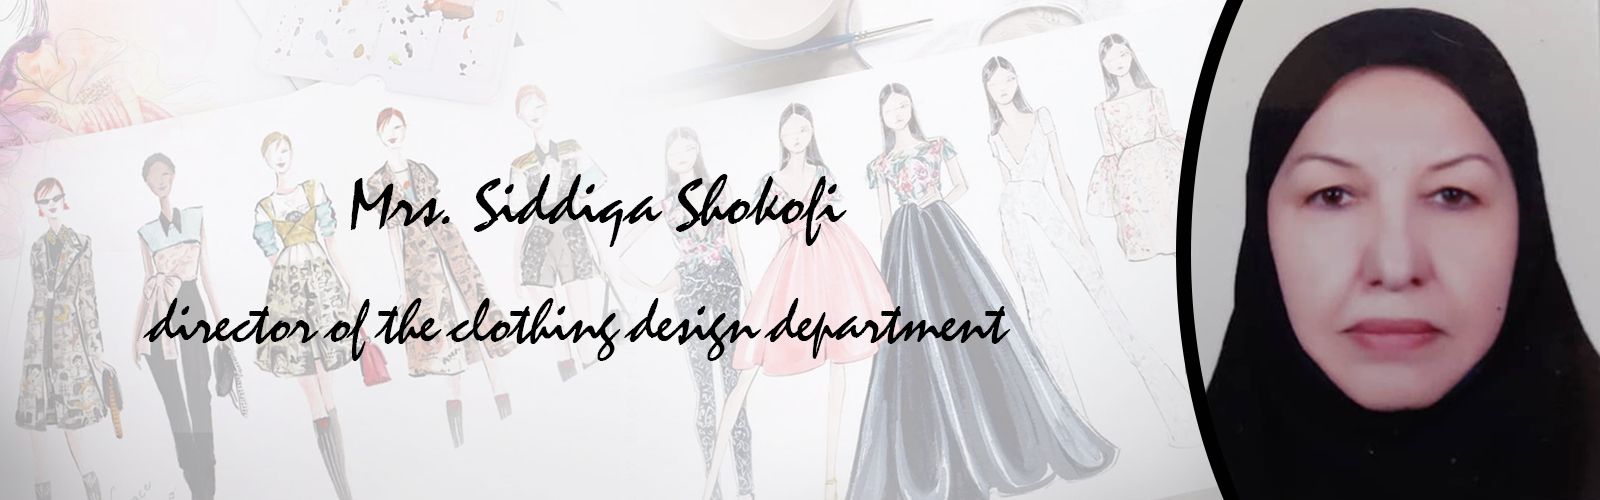 Mrs. Siddiqa Shokofi, director of the clothing design department